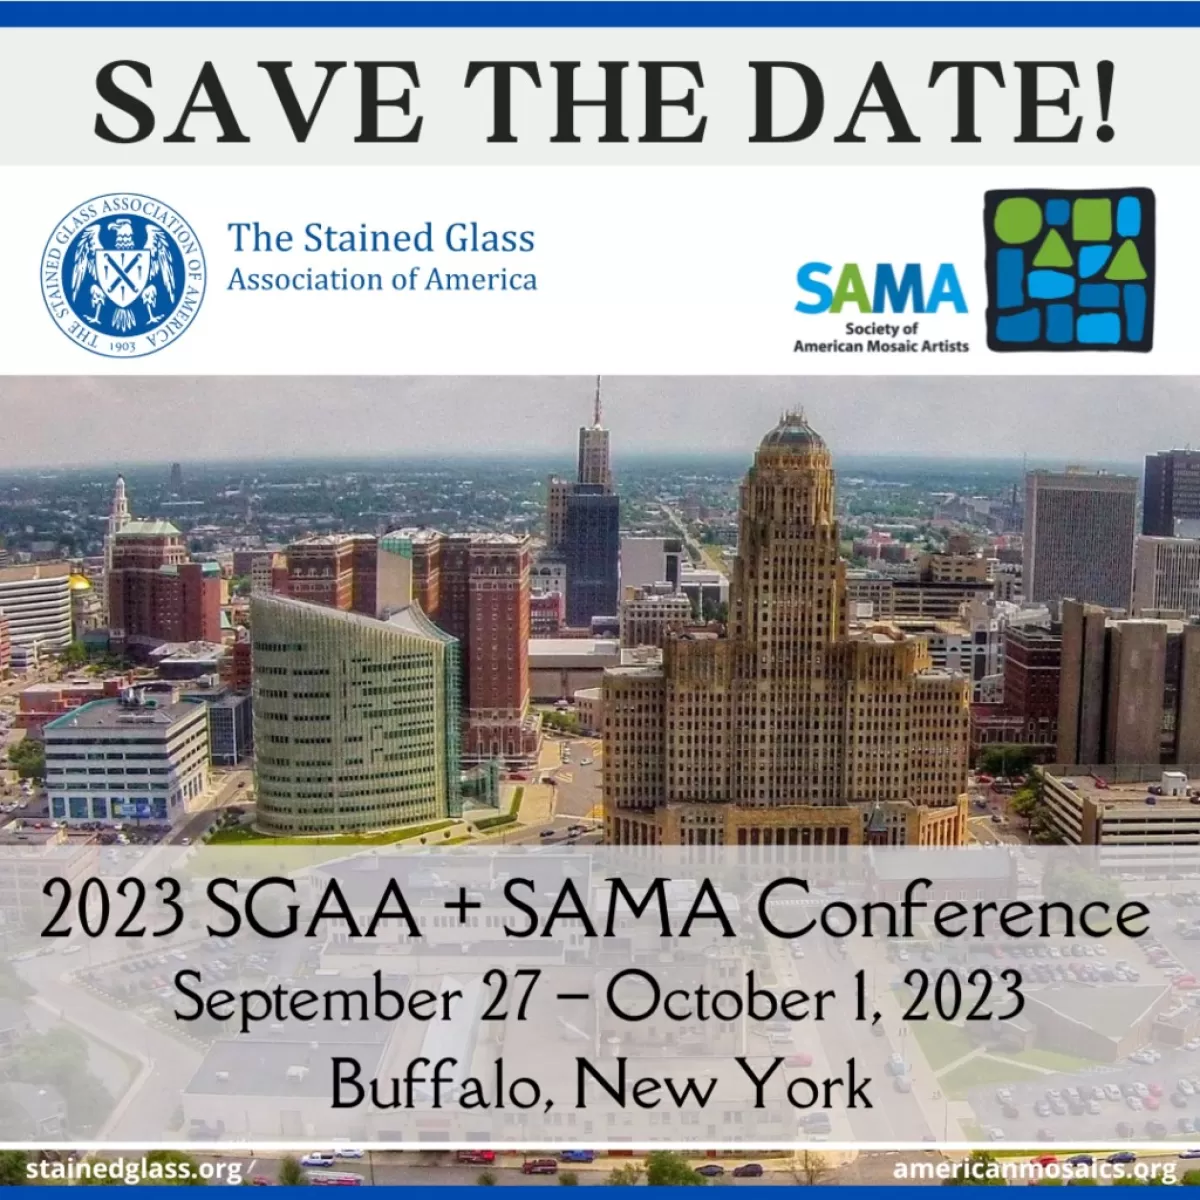 Save the Date! | 2023 SGAA + SAMA Conference | September 27 - October 1, 2023 | Buffalo, New York